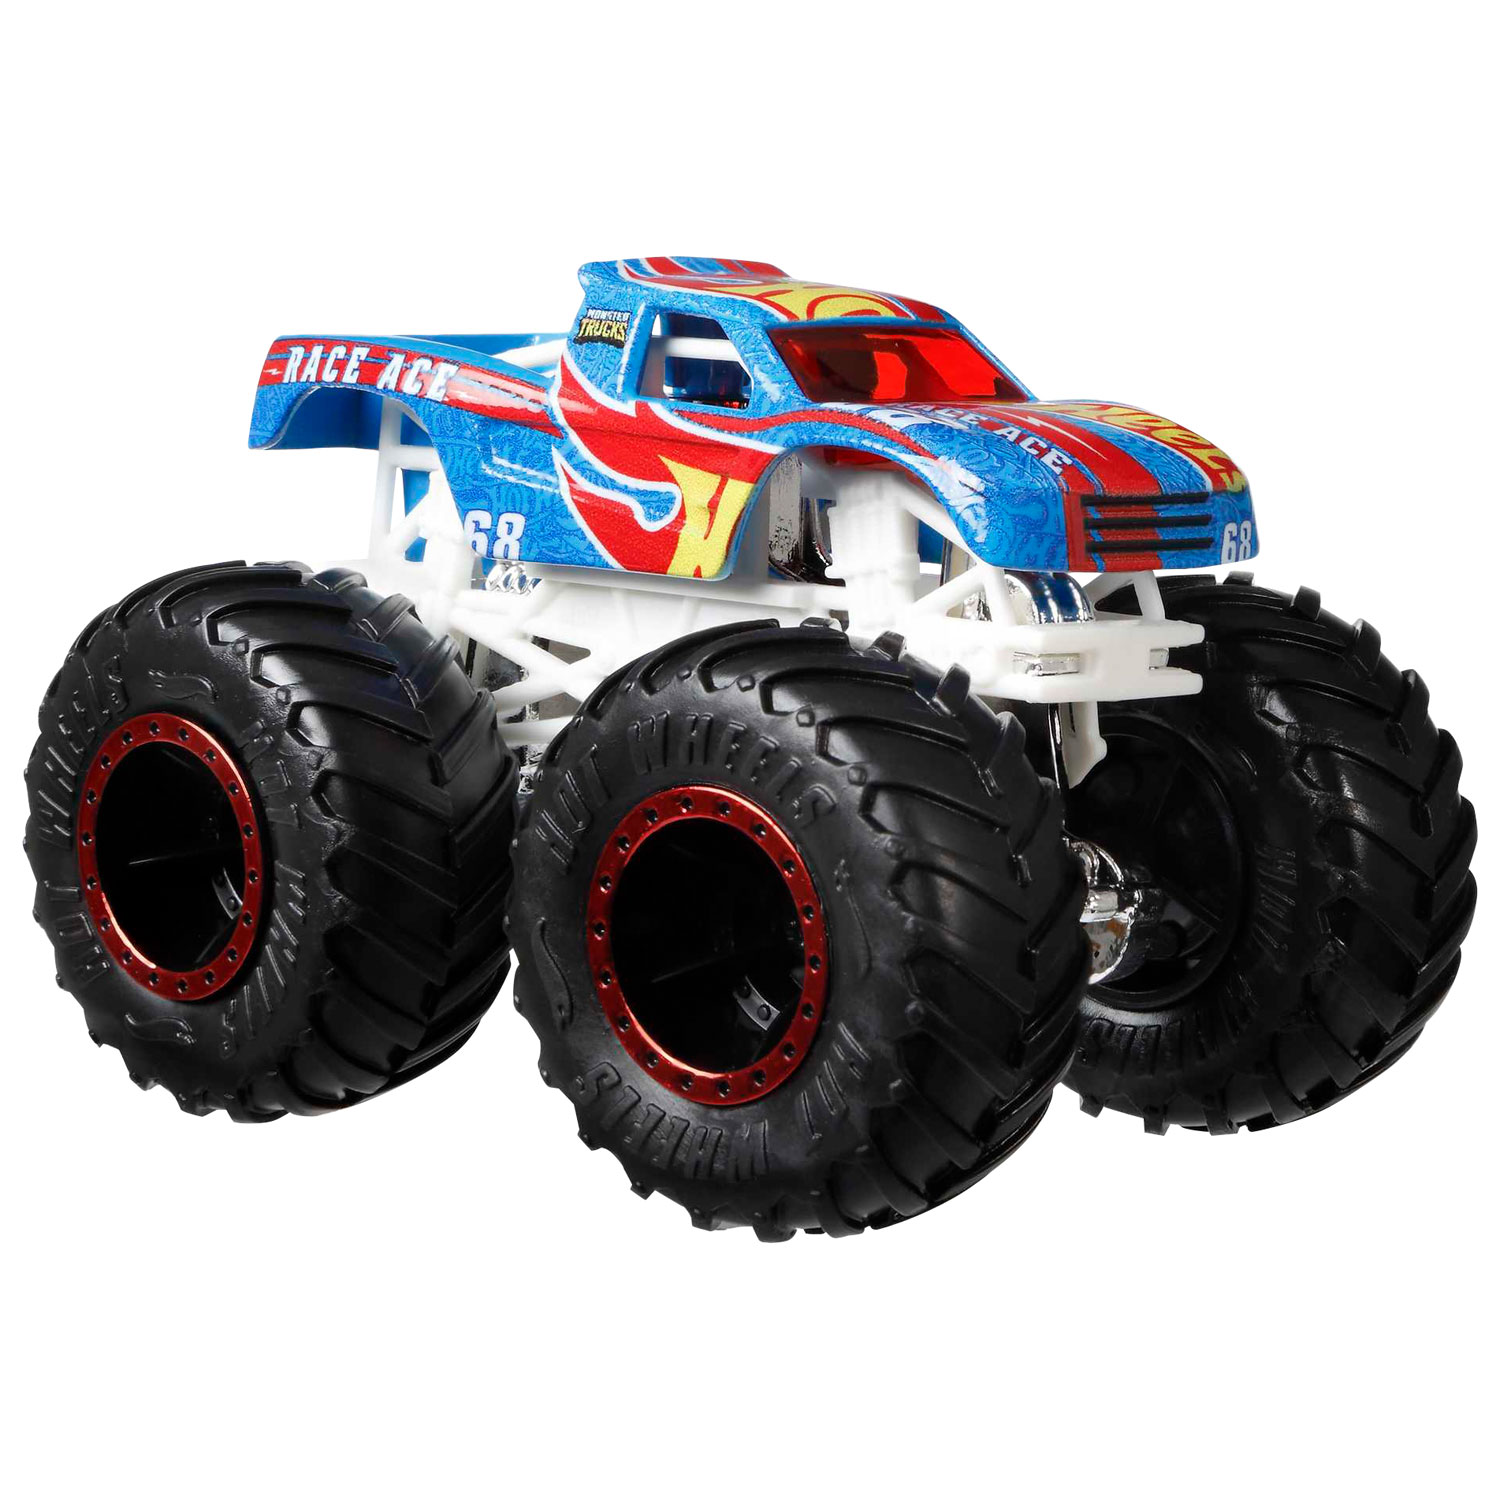 Mattel Hot Wheels Monster Toy Truck - 8 Pack